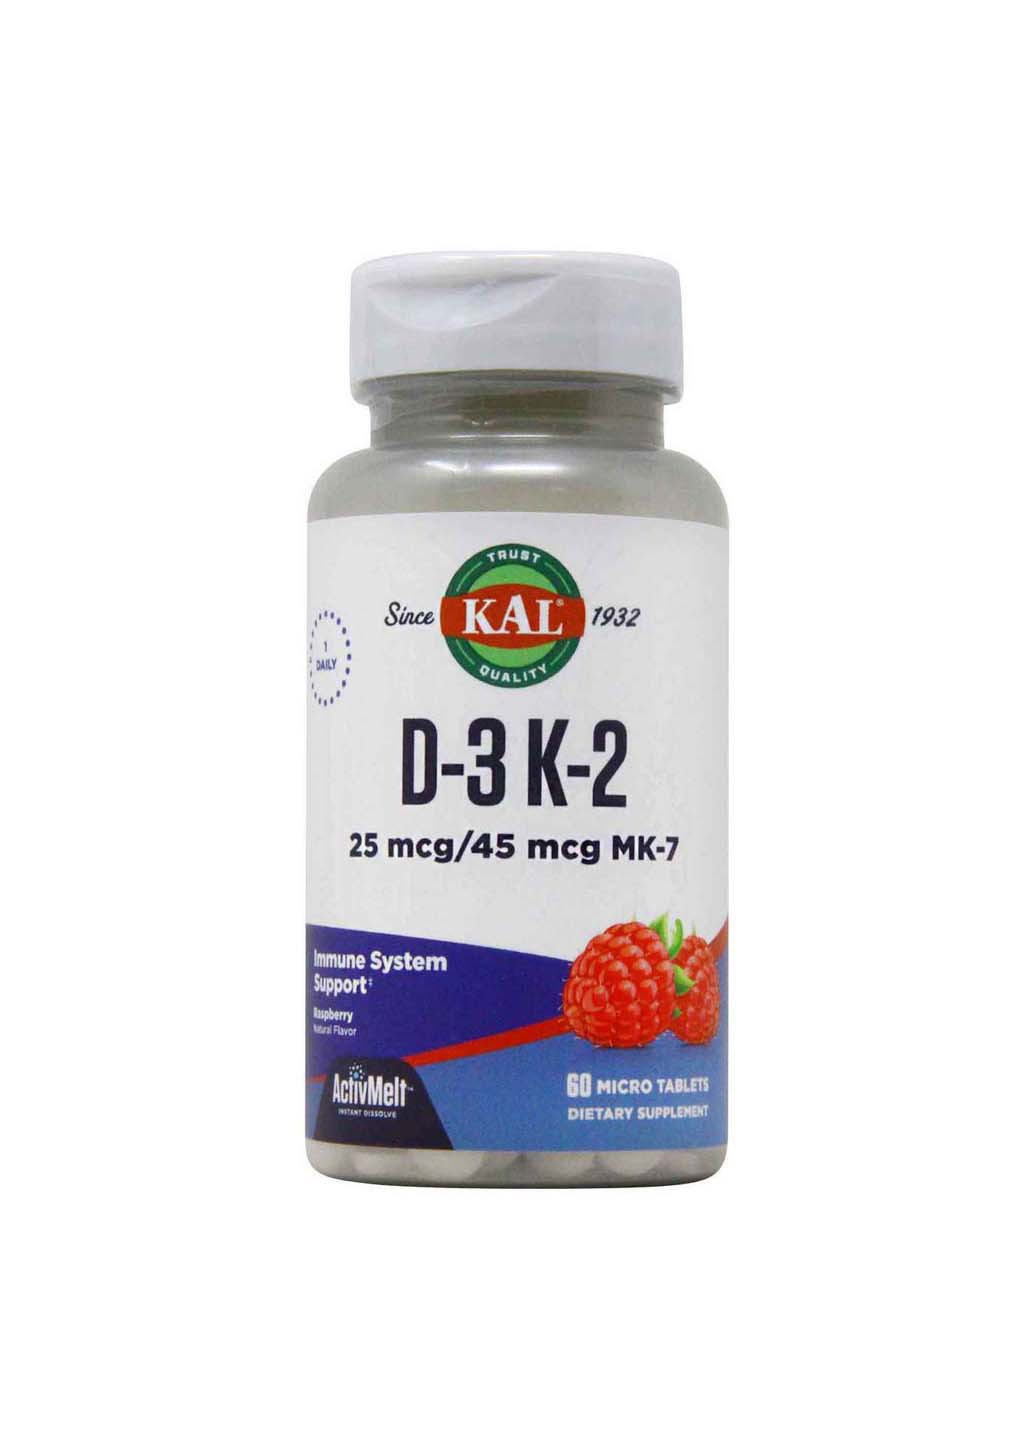 Витамины Д-3 и K-2 Vitamin D-3 K-2 вкус красной малины 1000 МЕ/45 мкг MK-7 60 микротаблеток KAL (256930976)